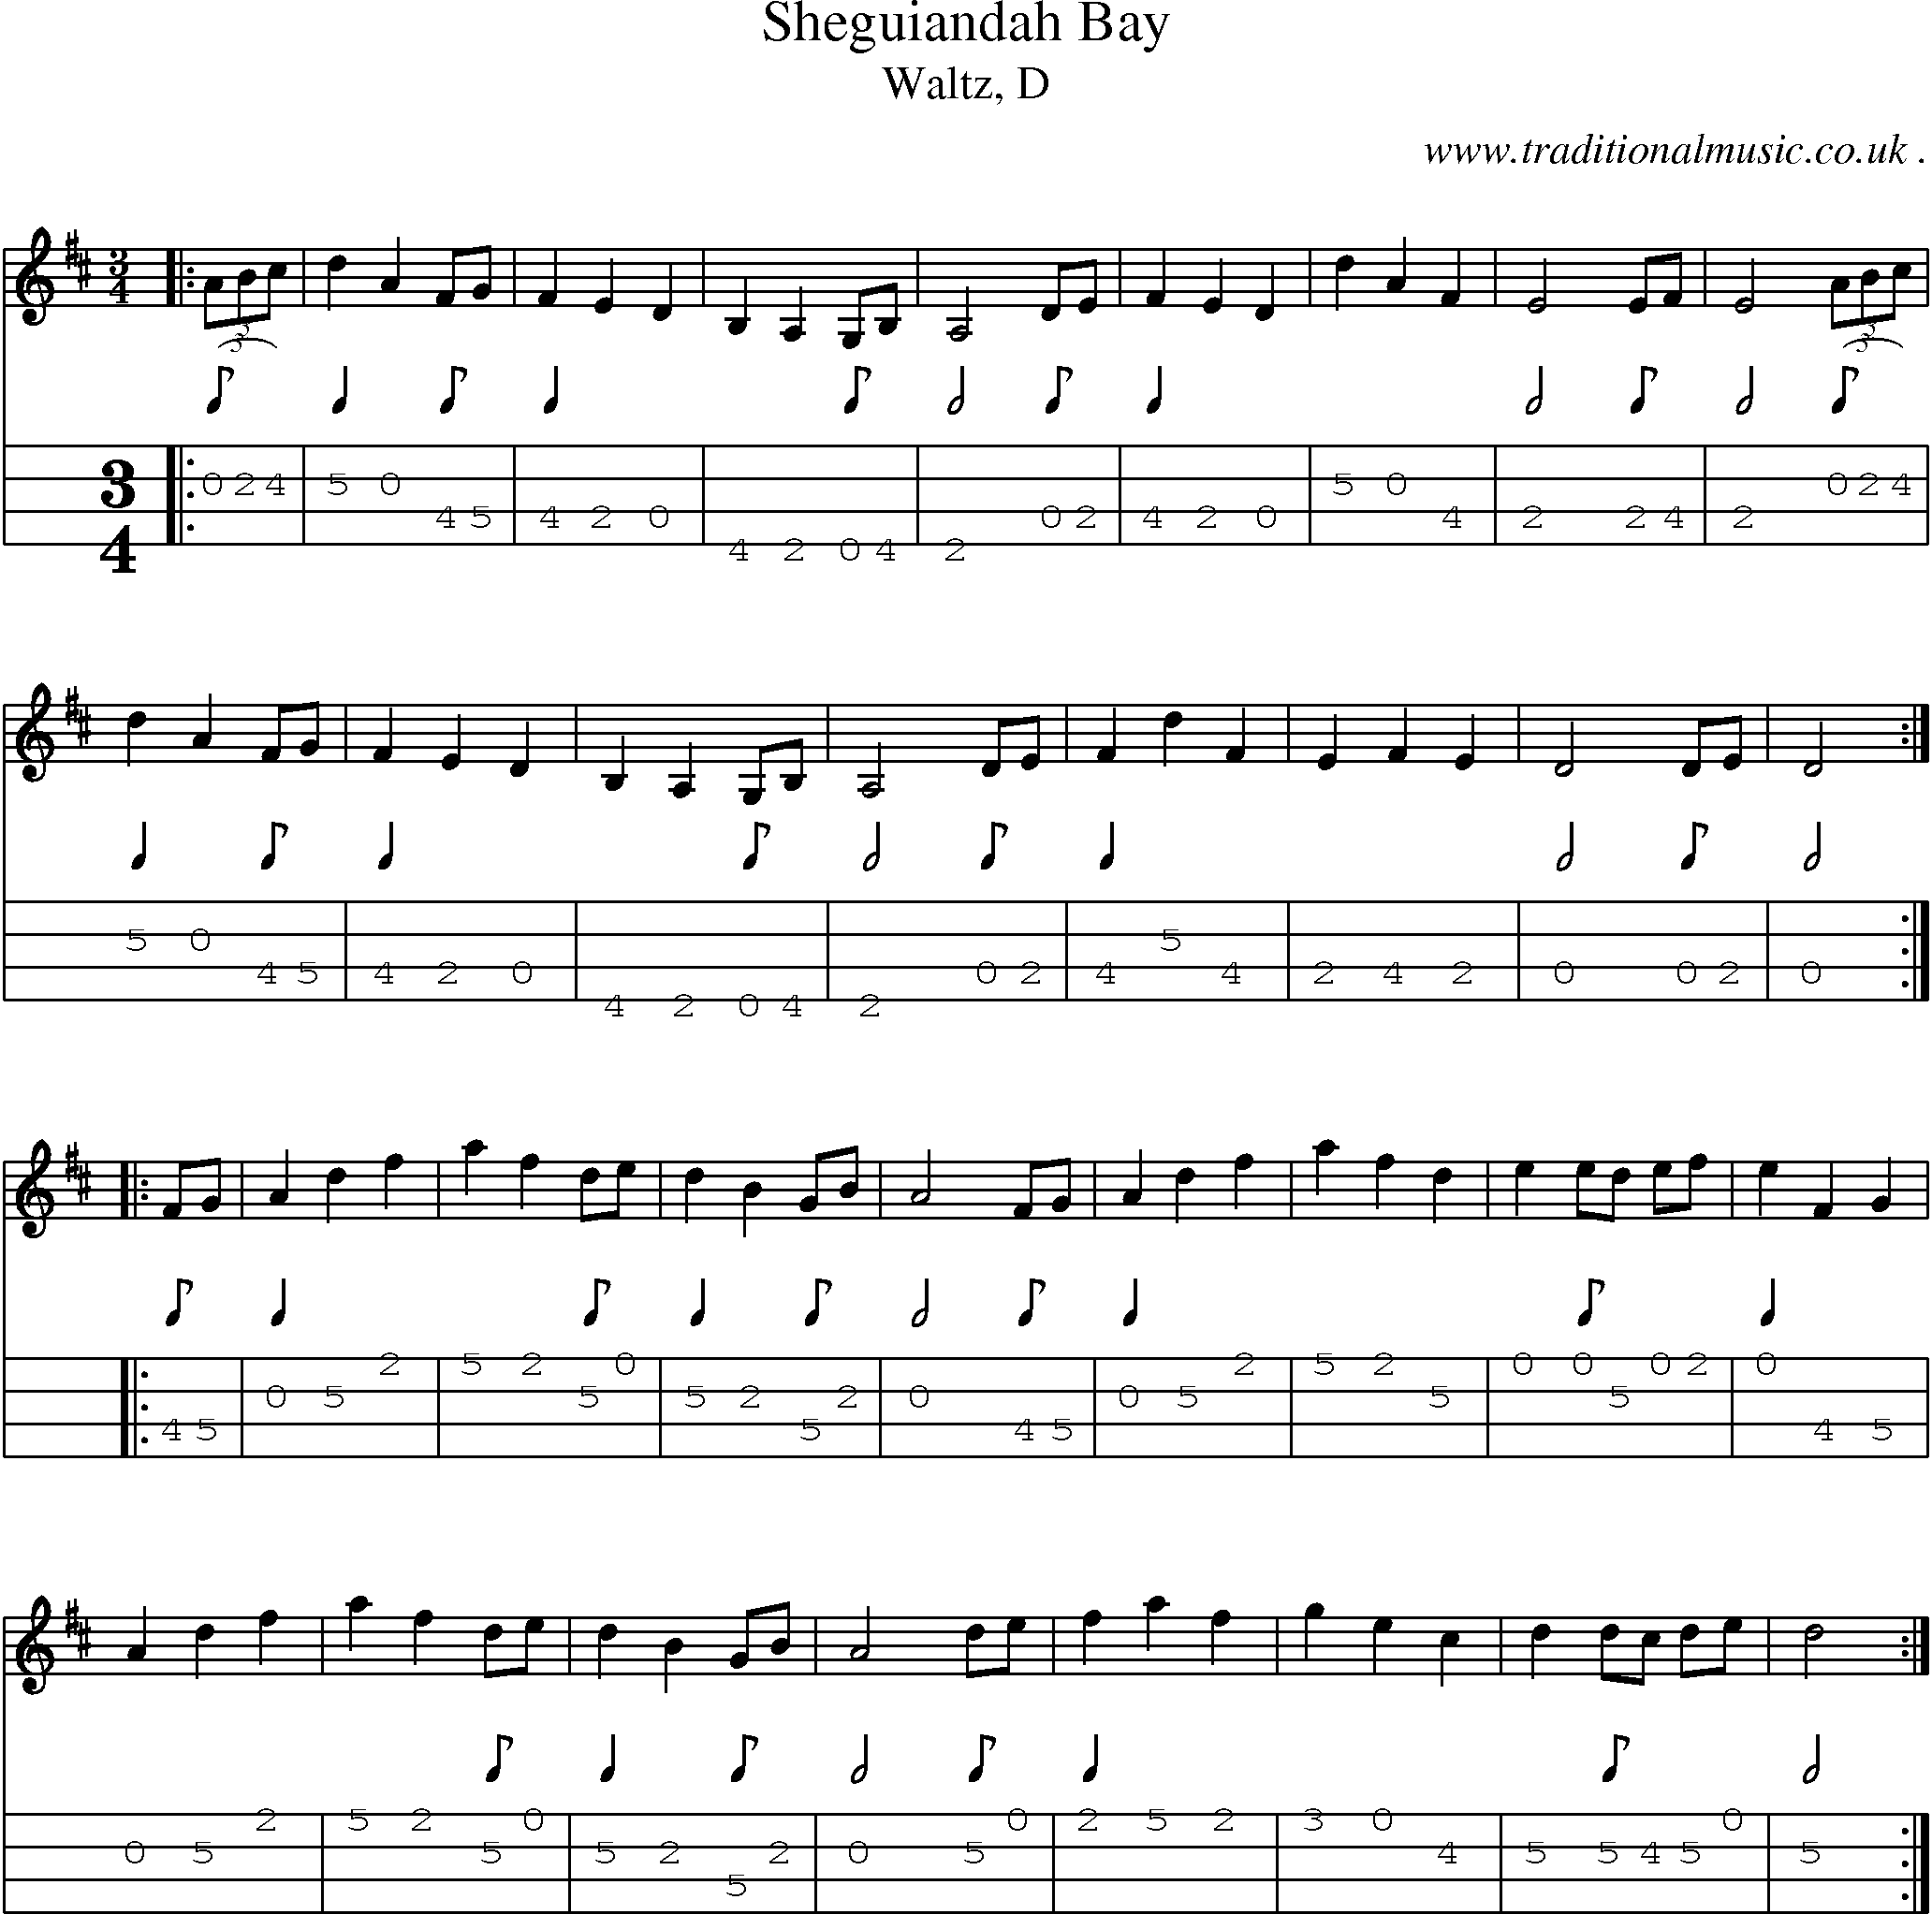 Sheet-music  score, Chords and Mandolin Tabs for Sheguiandah Bay